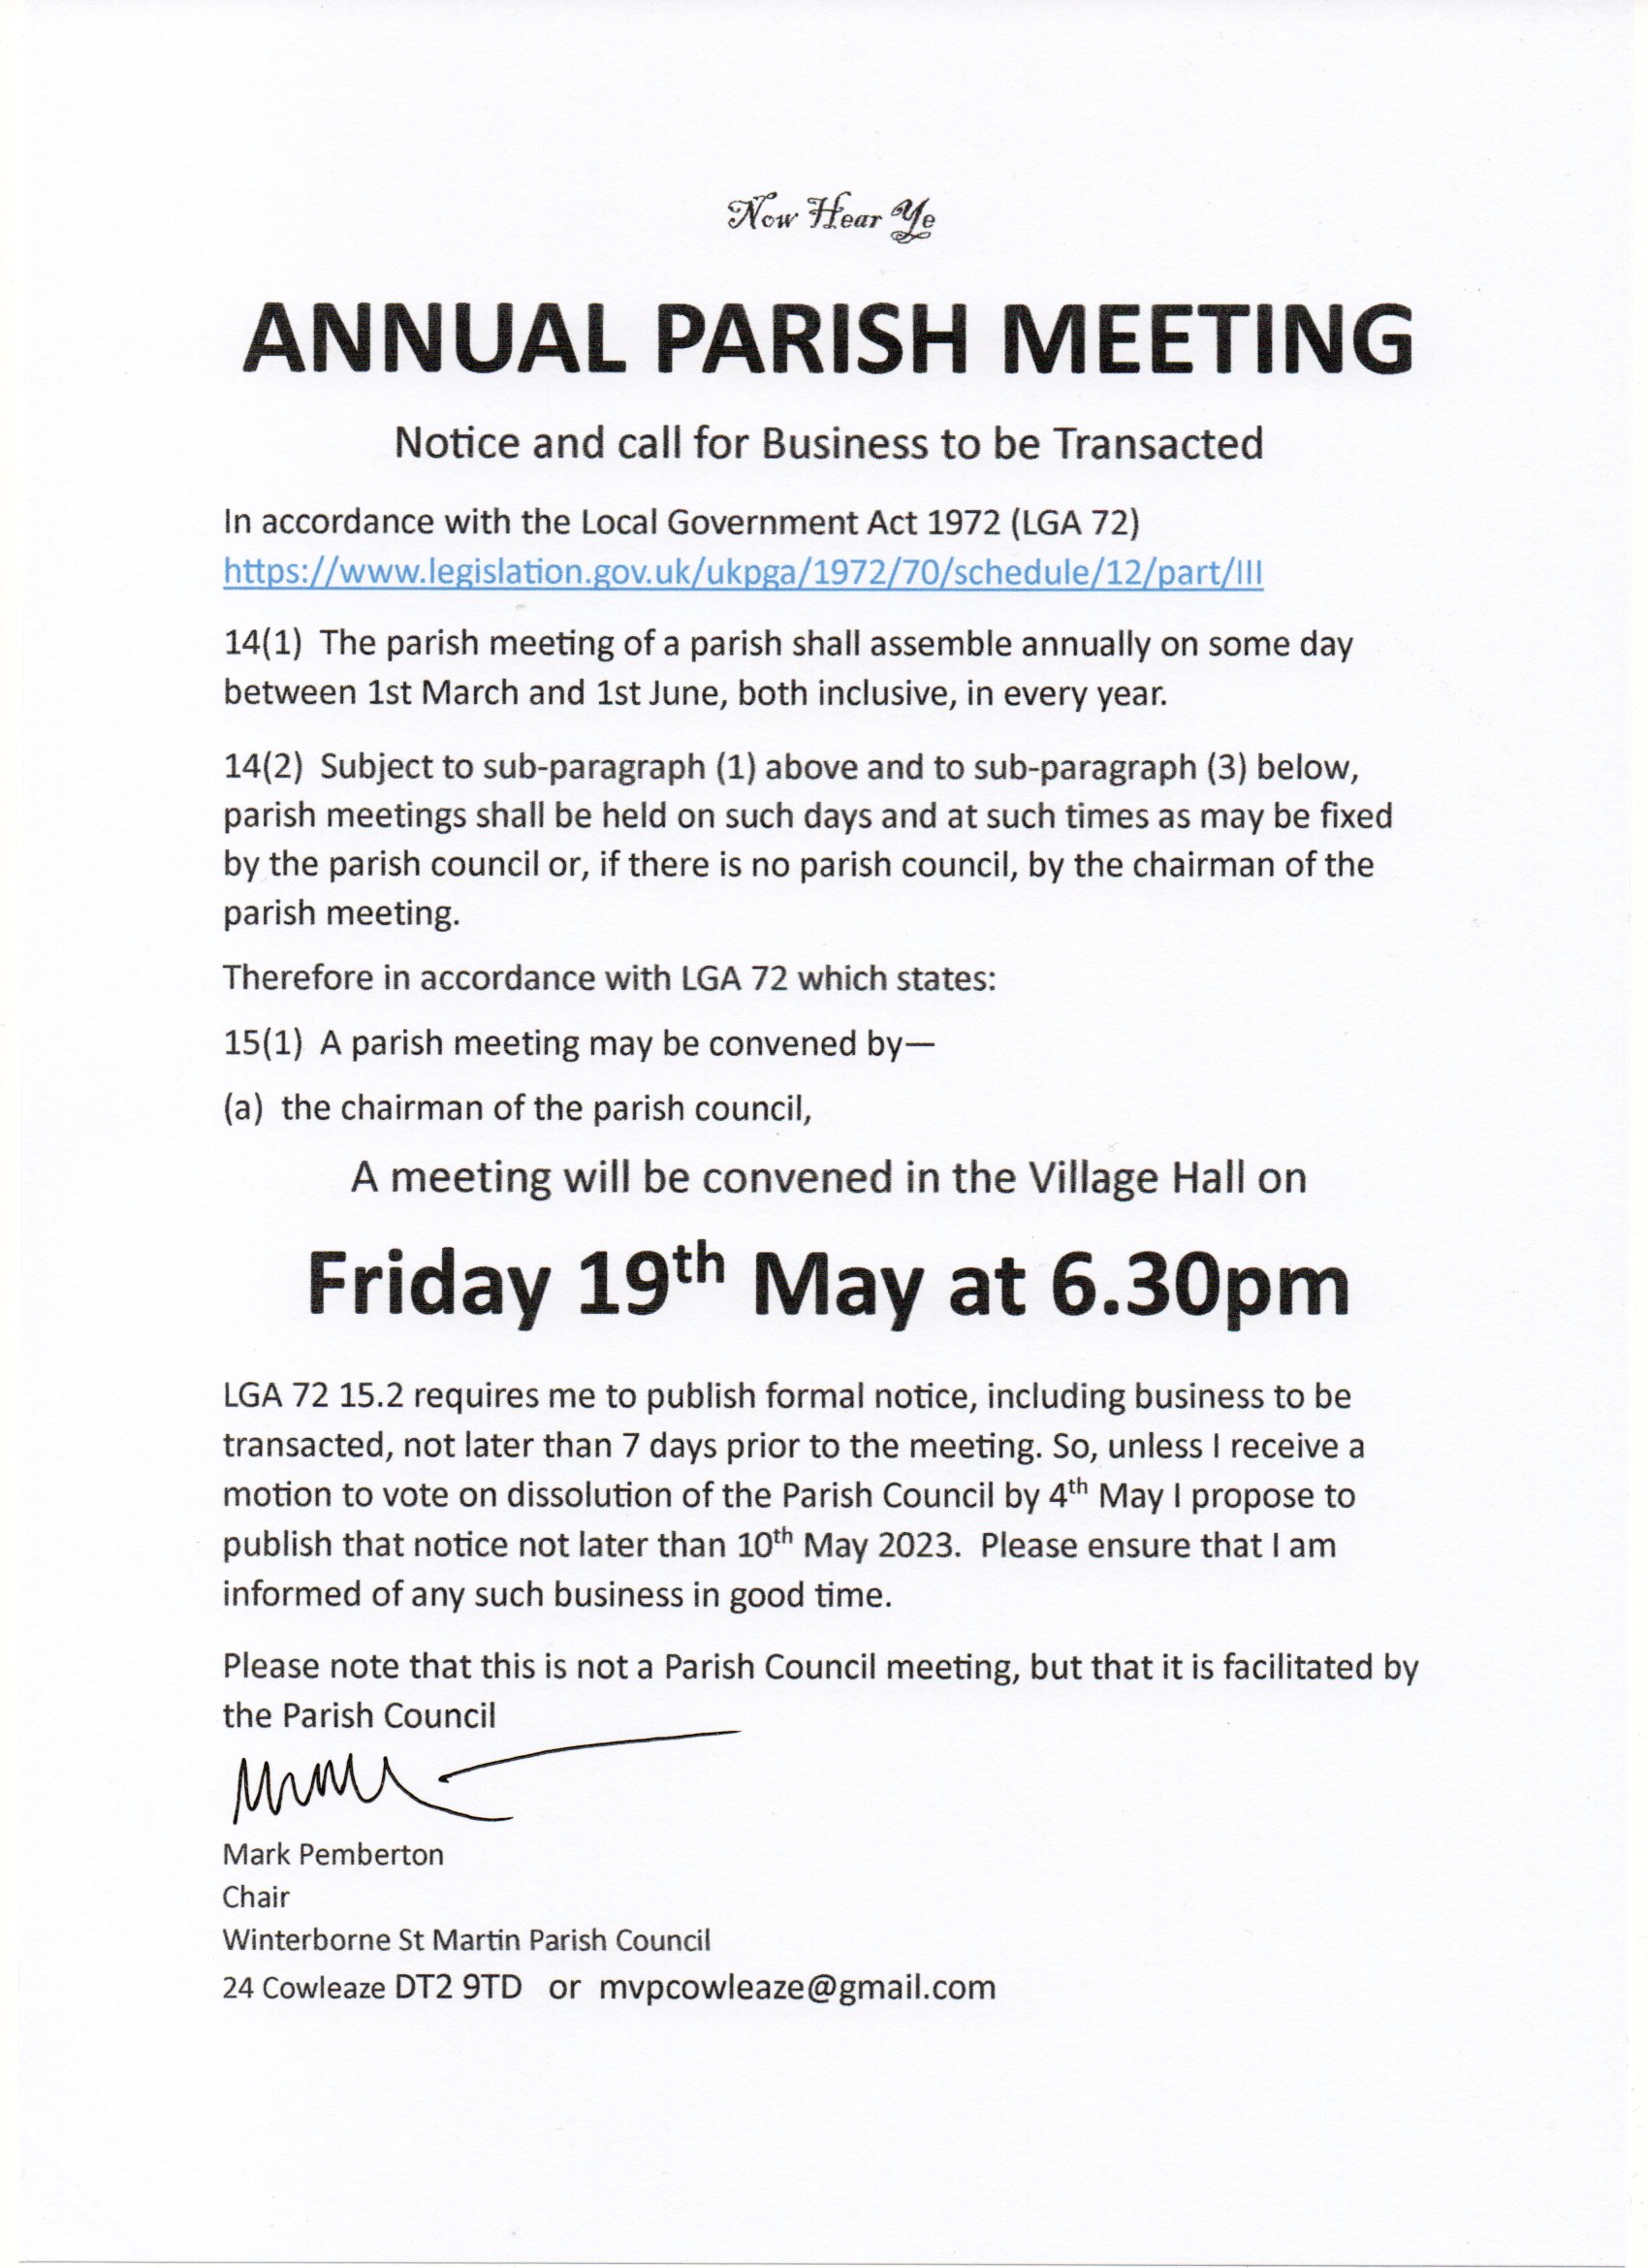 Winterborne St Martin Parish Council 19 May 23 Annual Parish Meeting Notice